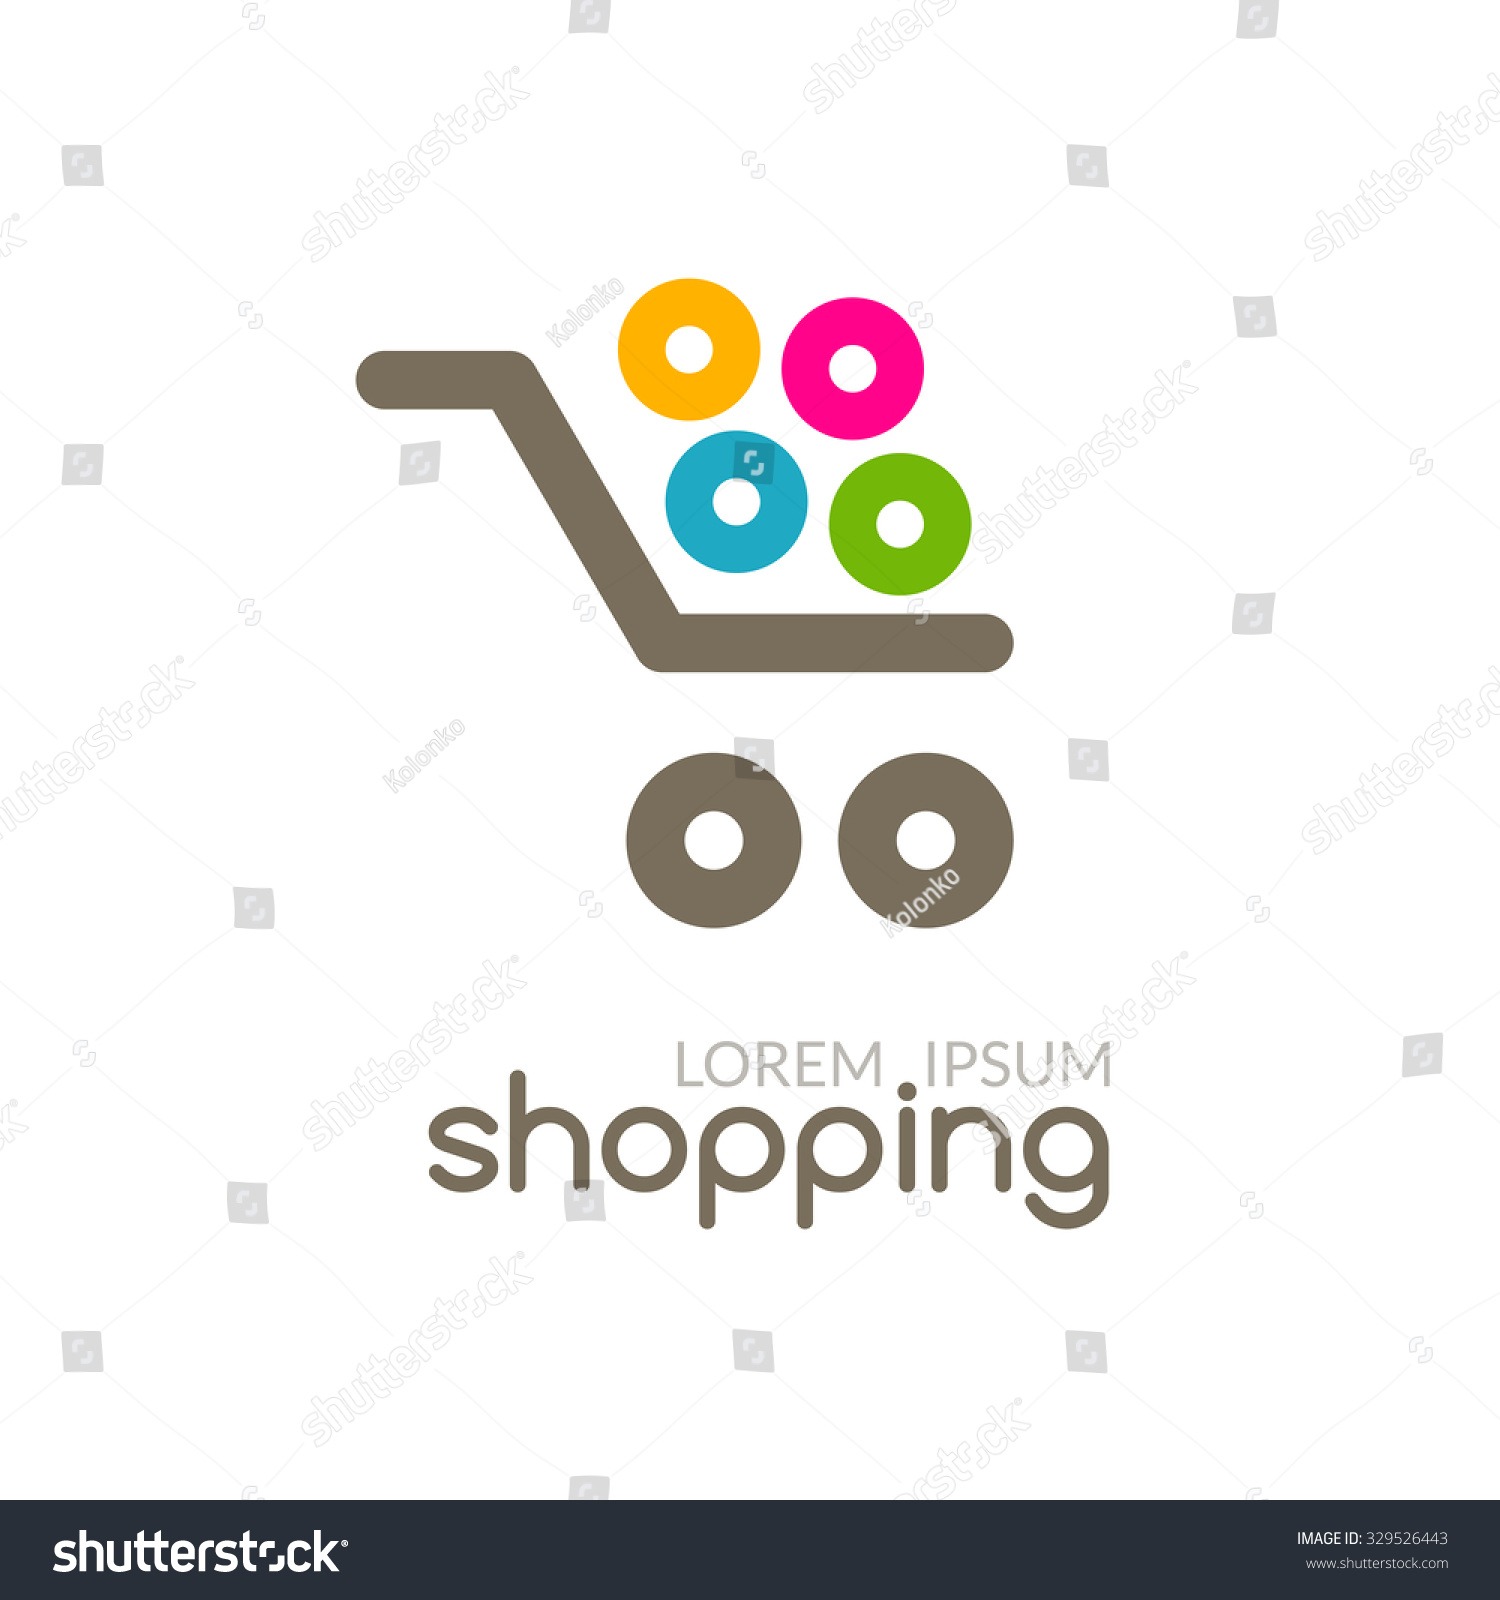 stock-vector-online-shop-mall-market-concept-cart-logo-design-vector-business-template-icon-logotype-for-store-329526443.jpg